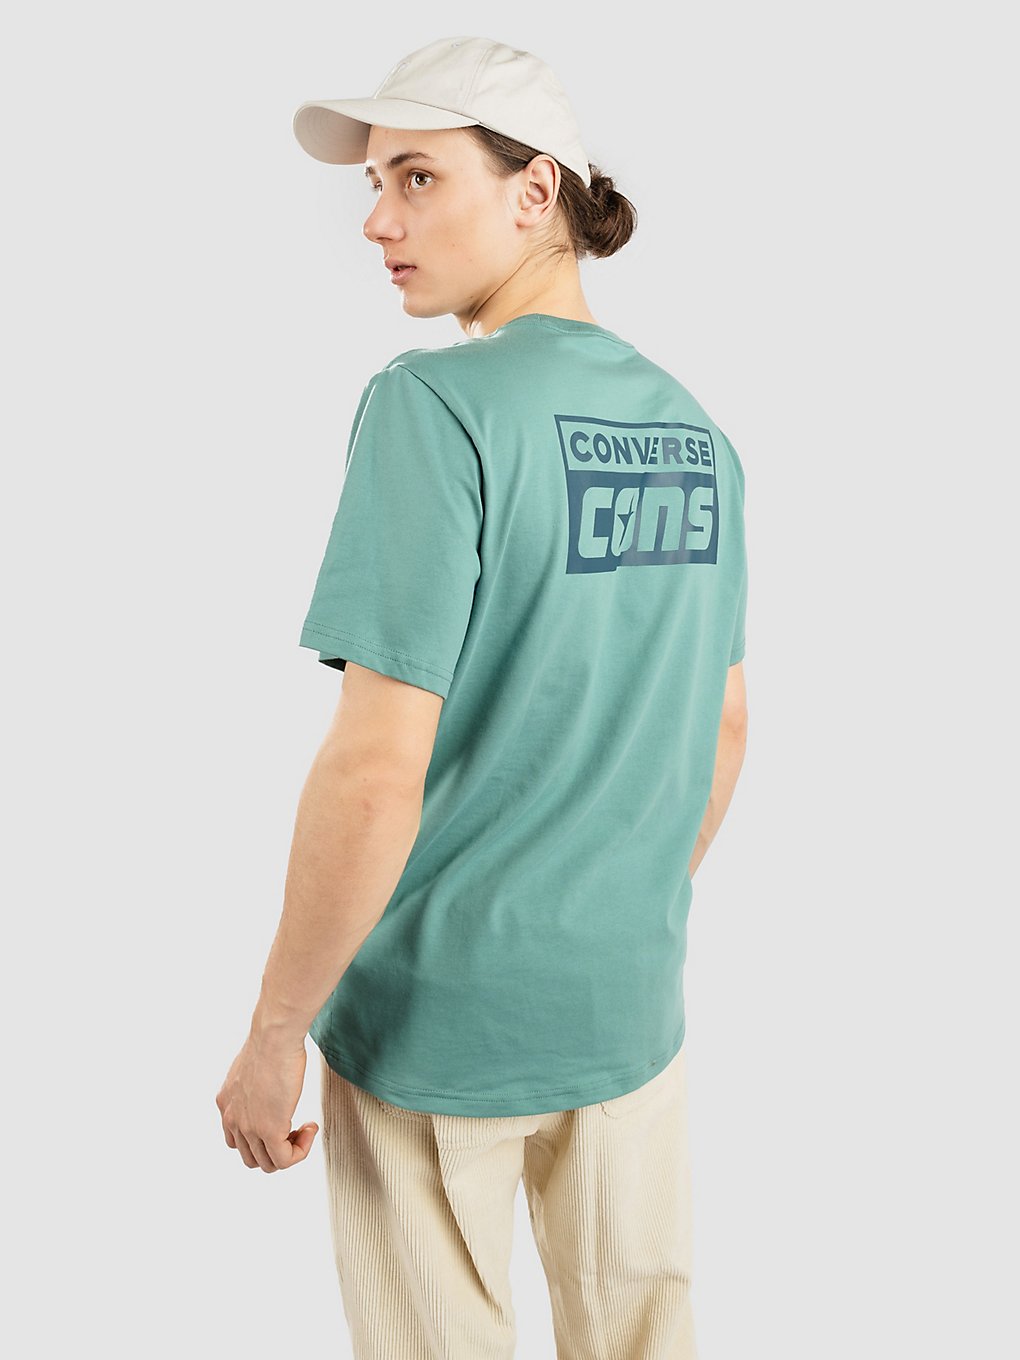 converse cons t-shirt algae coast